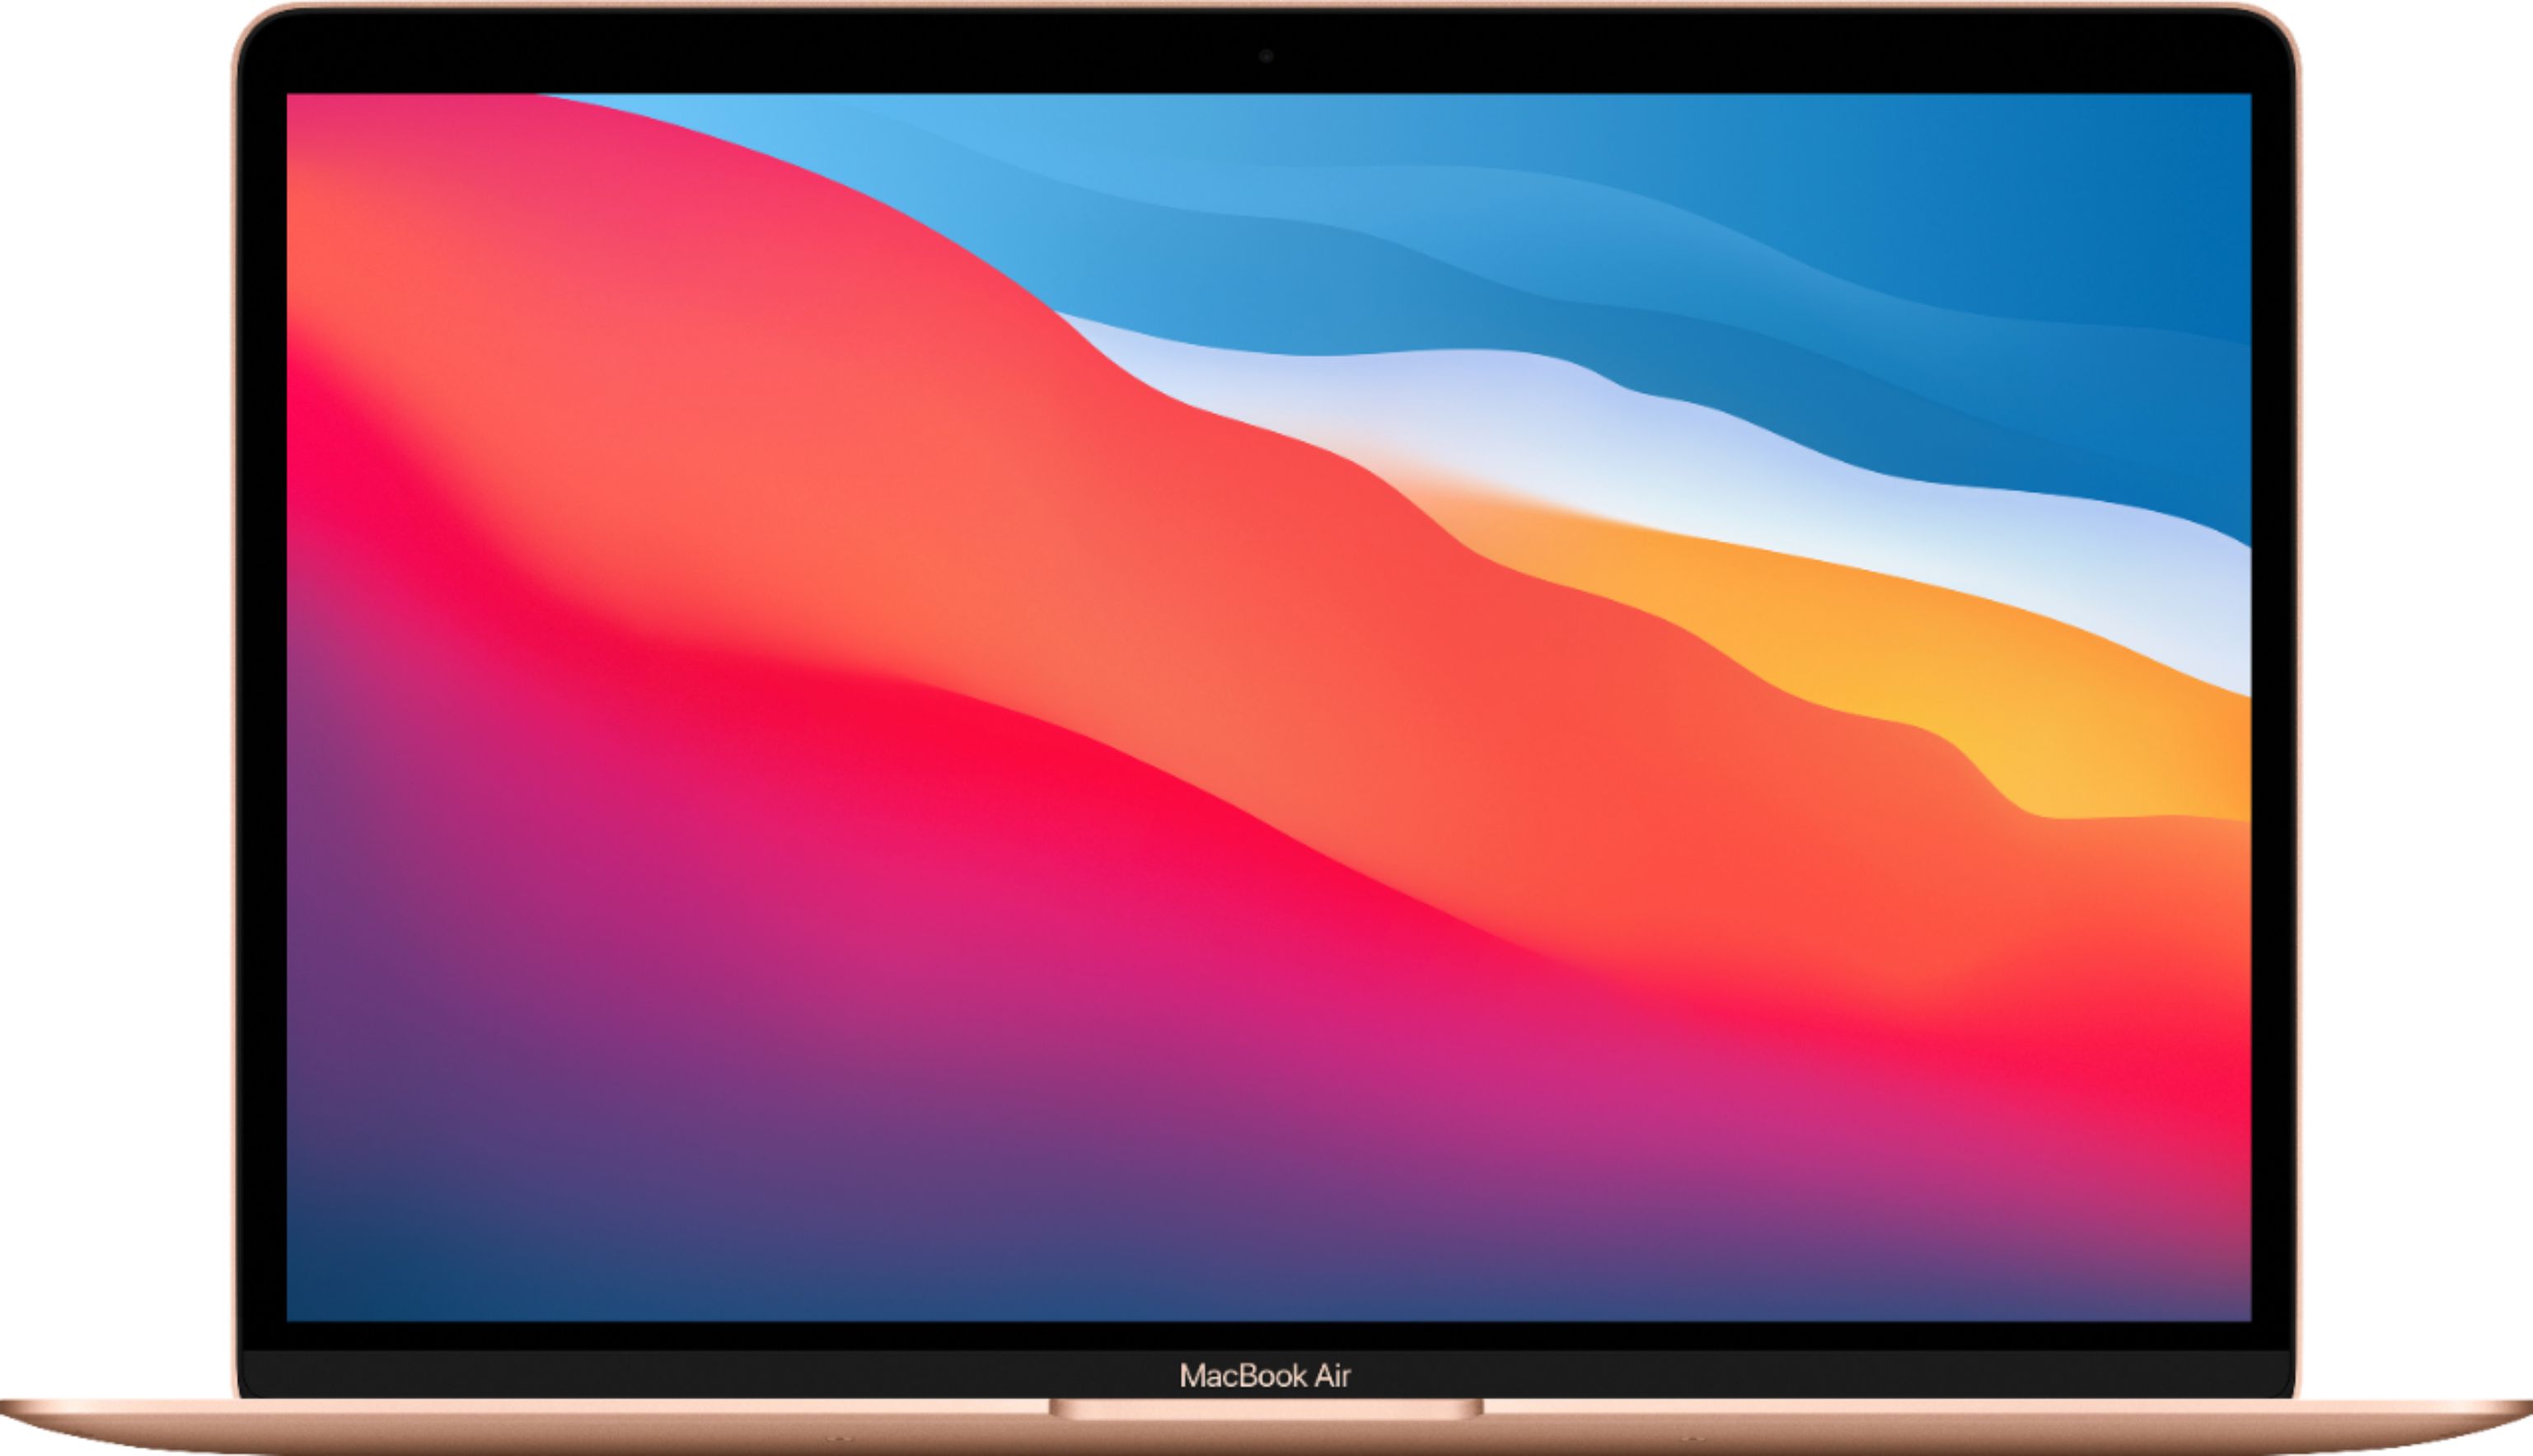 MacBook Air 13.3" Laptop - Apple M1 chip - 8GB Memory - 256GB SSD (Latest Model) - Gold